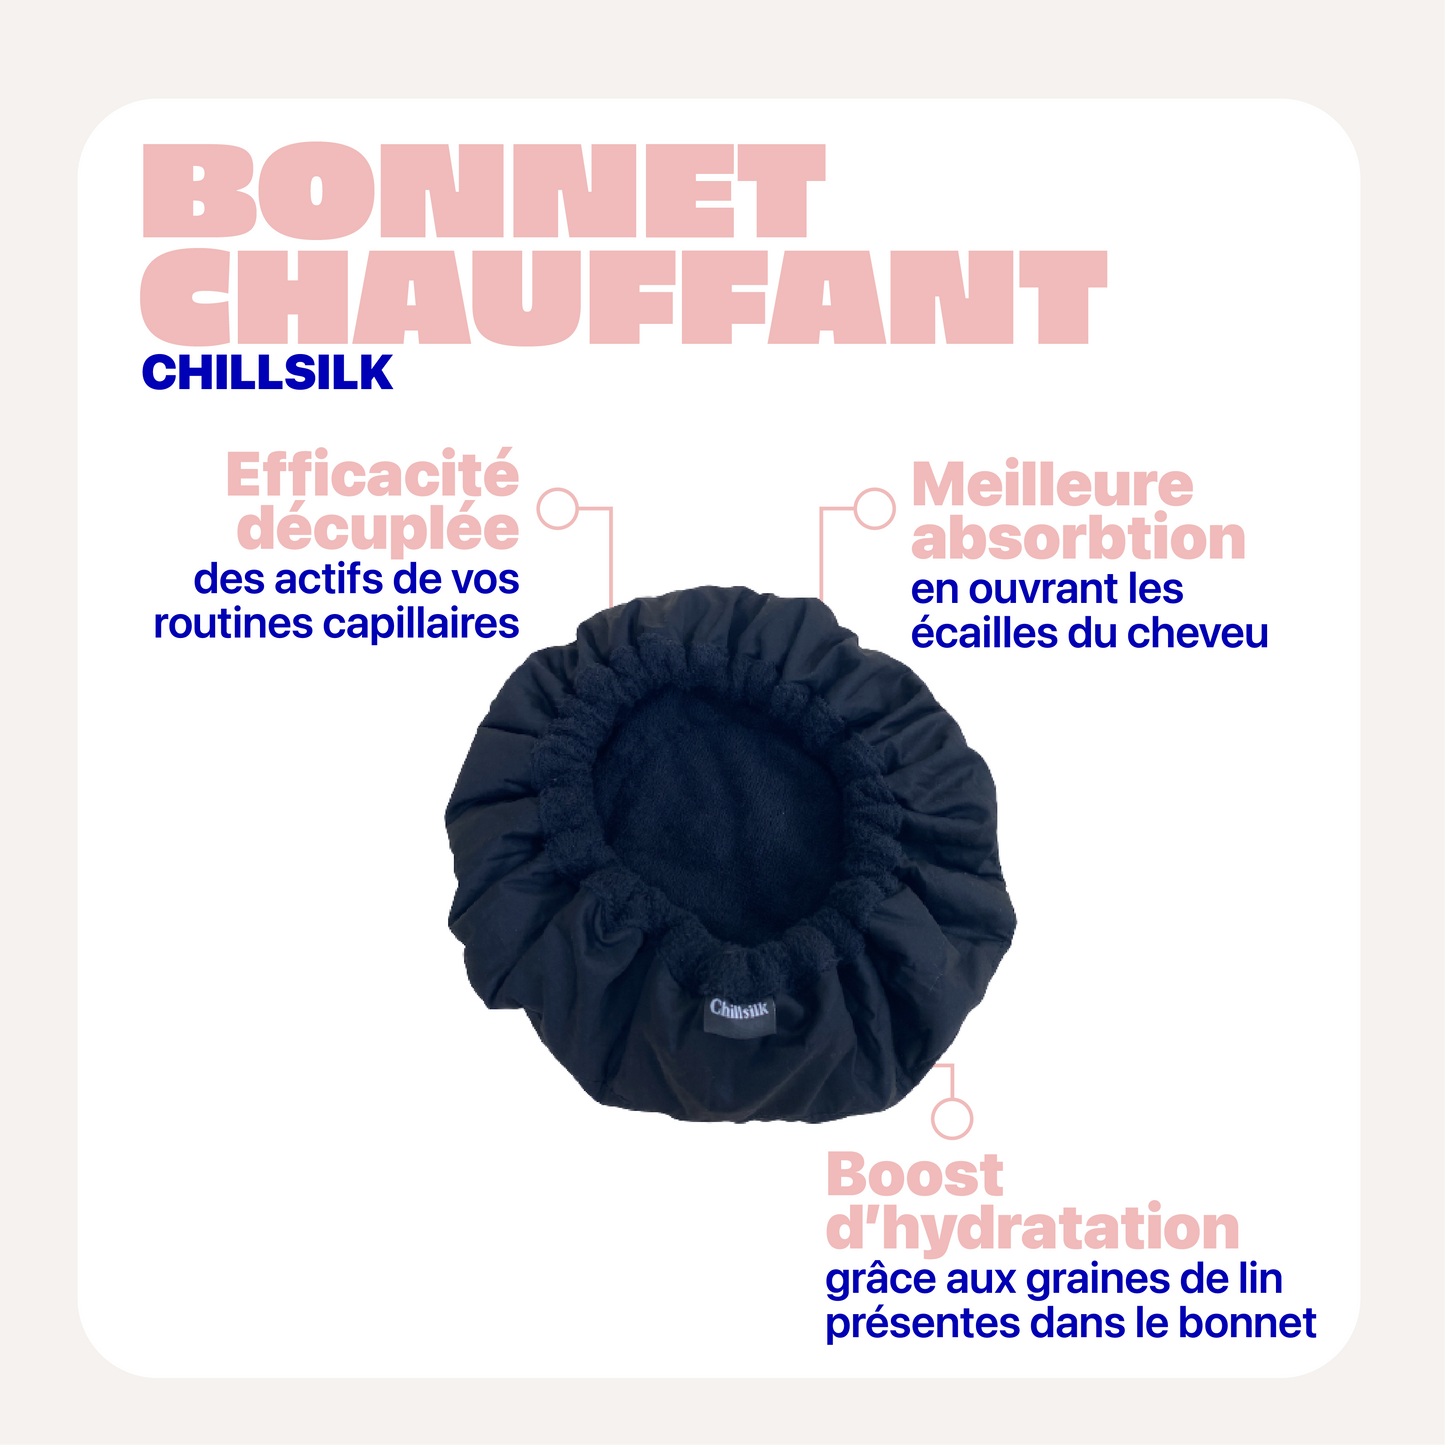 Bonnet chauffant • Mon habit chauffant